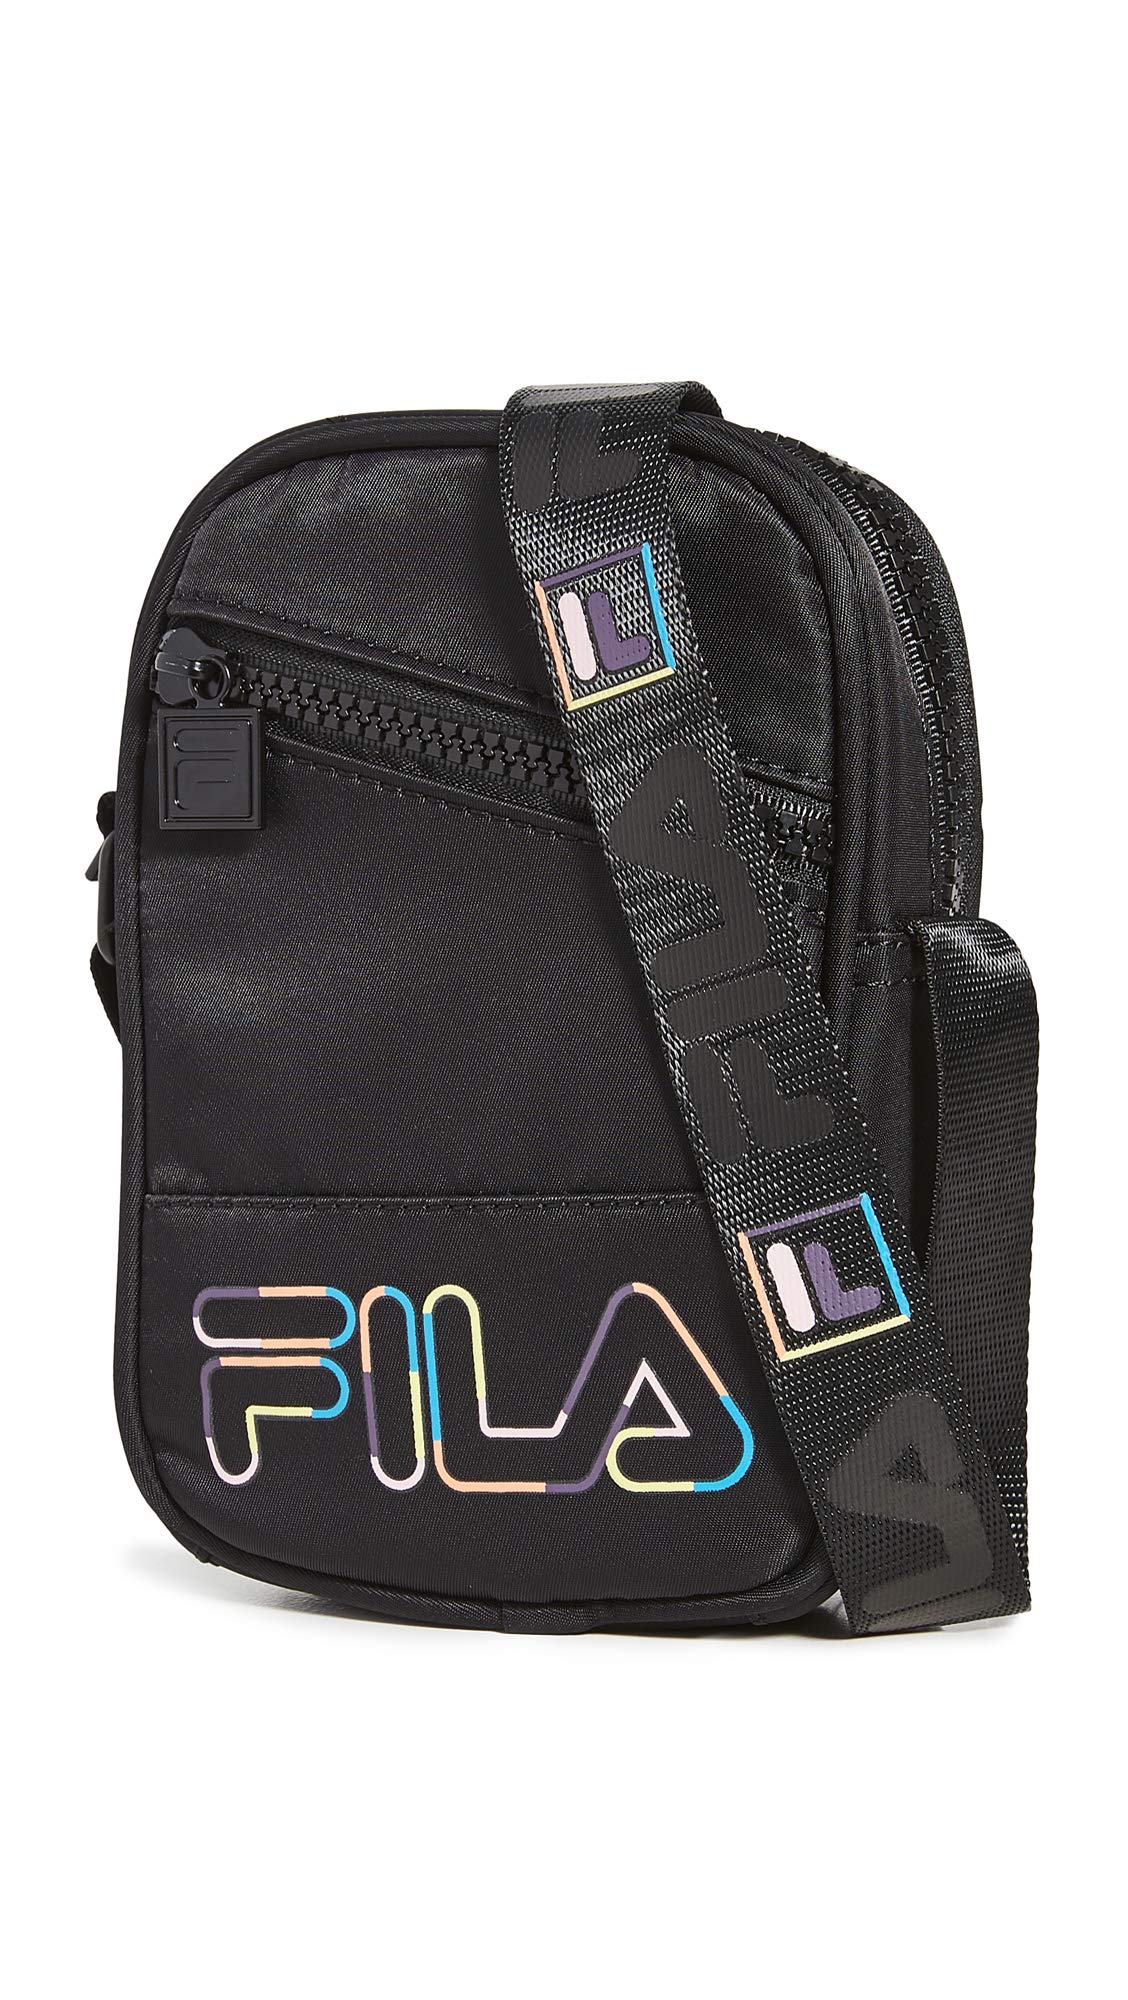 Fila Mens Electric camera Bag, Black, One Size